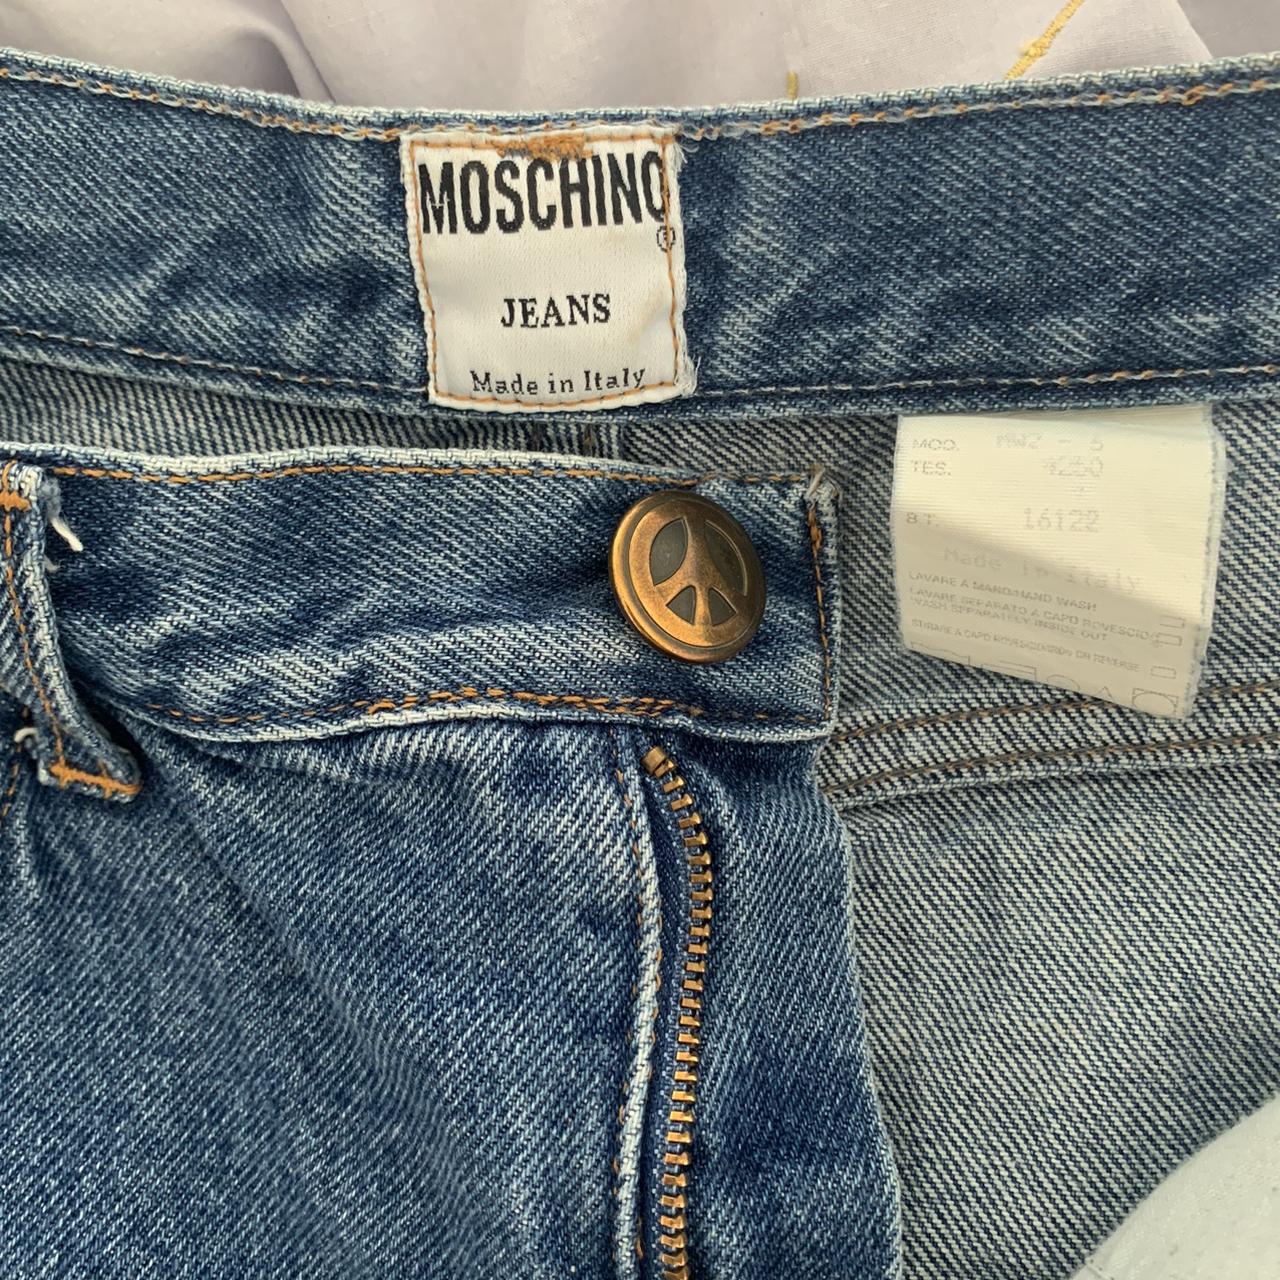 Moschino jeans mom jean style, waist 25 best fit... - Depop